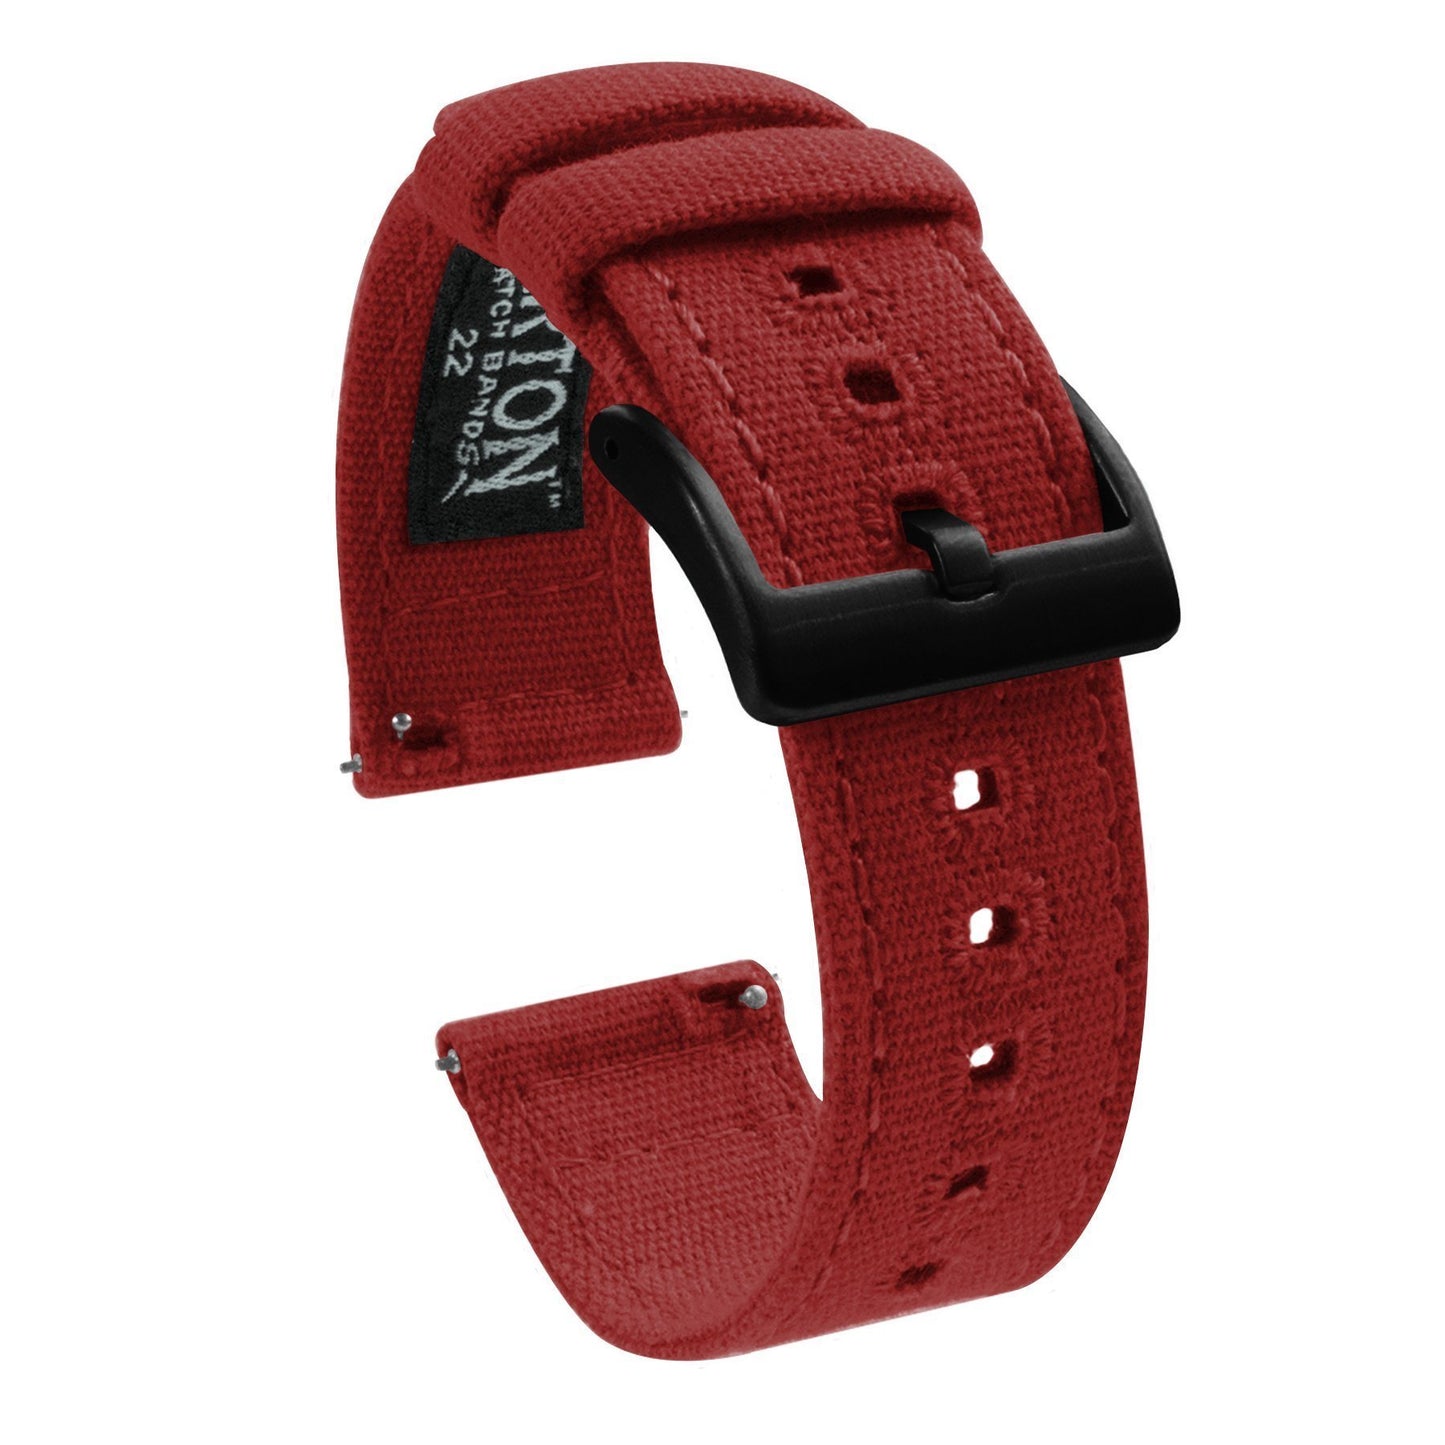 Samsung Galaxy Watch Active | Crimson Red Canvas - Barton Watch Bands